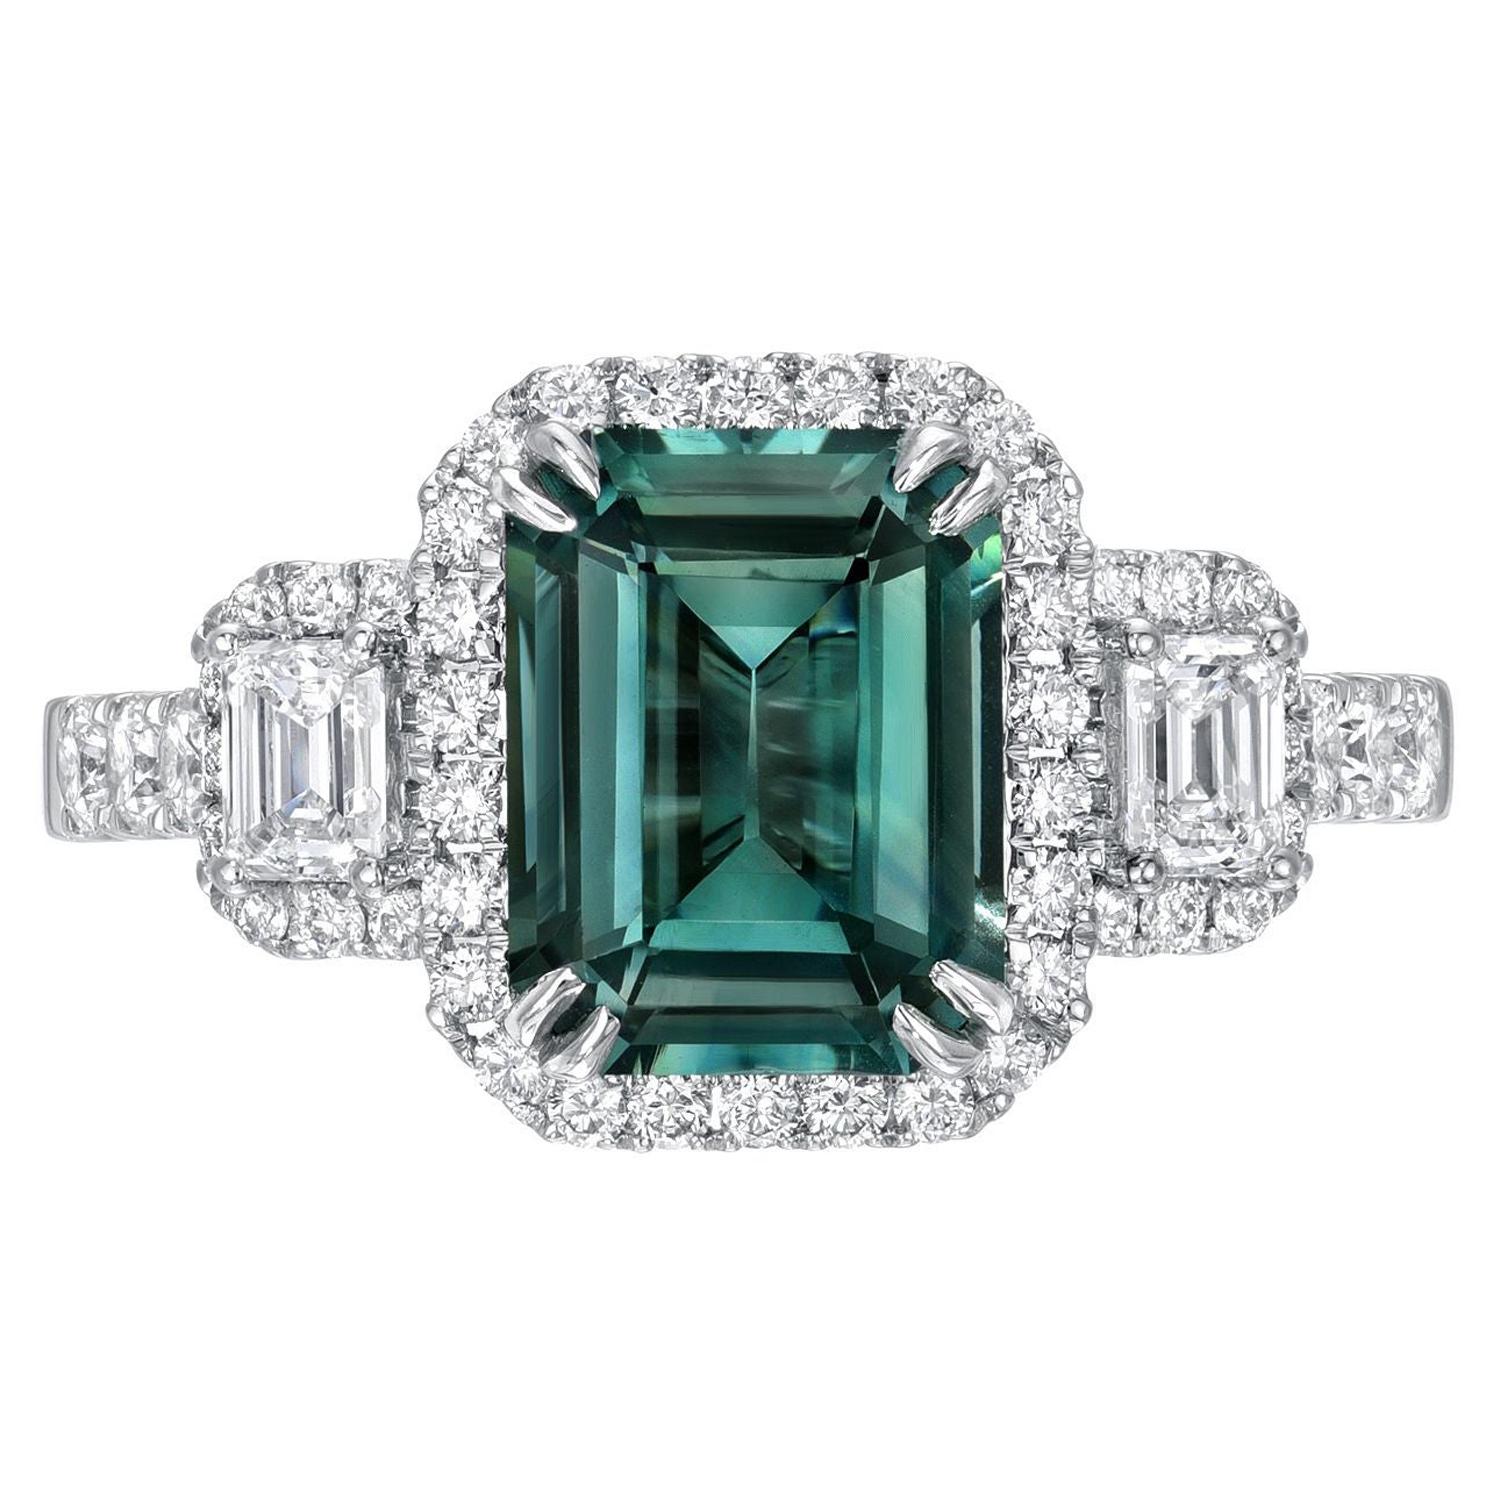 Greenish Blue Teal Sapphire Ring 2.92 Carat Emerald Cut